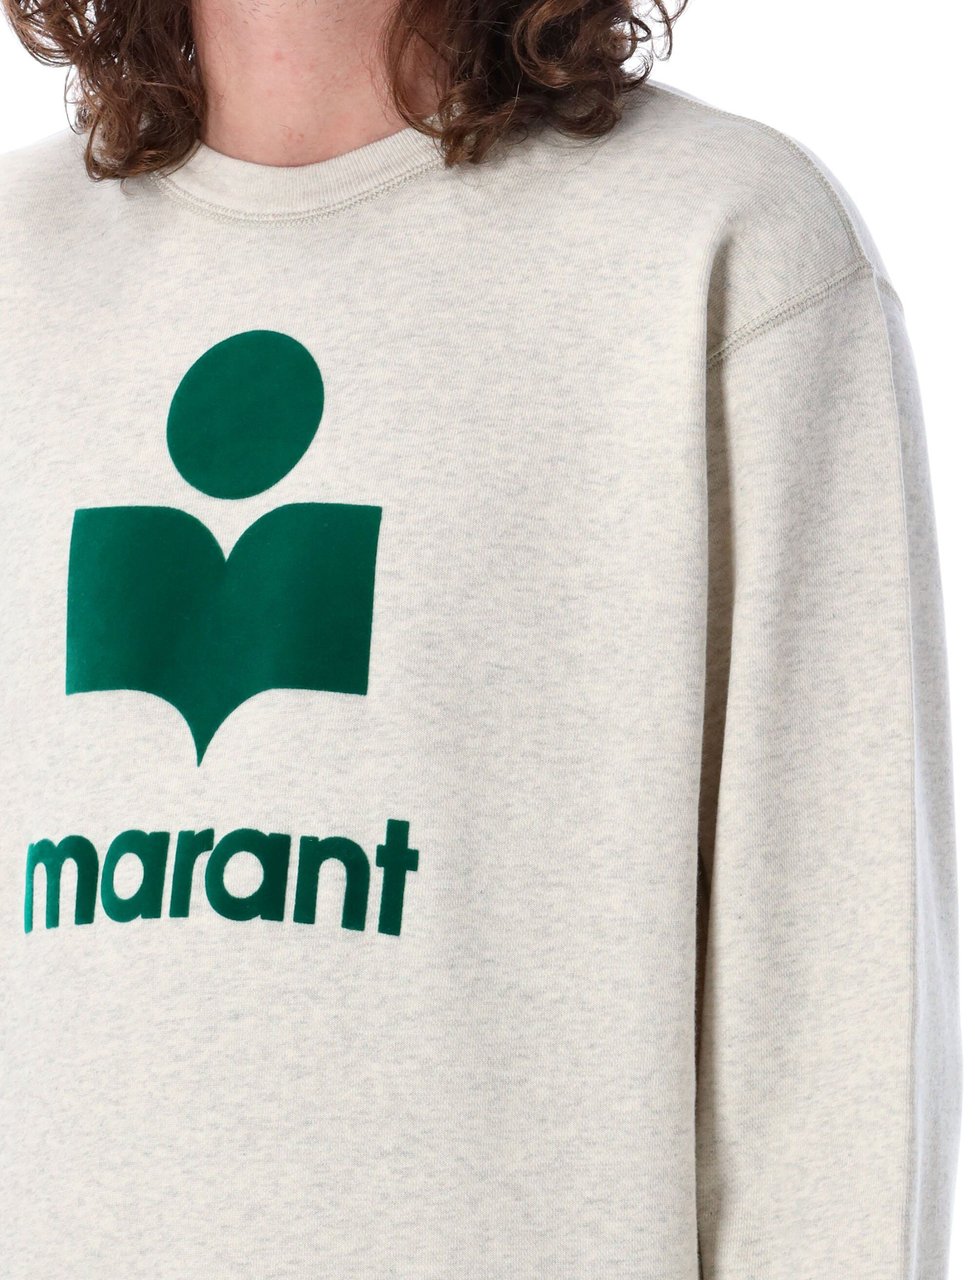 Isabel Marant Mikoy logo sweatshirt Neutraal